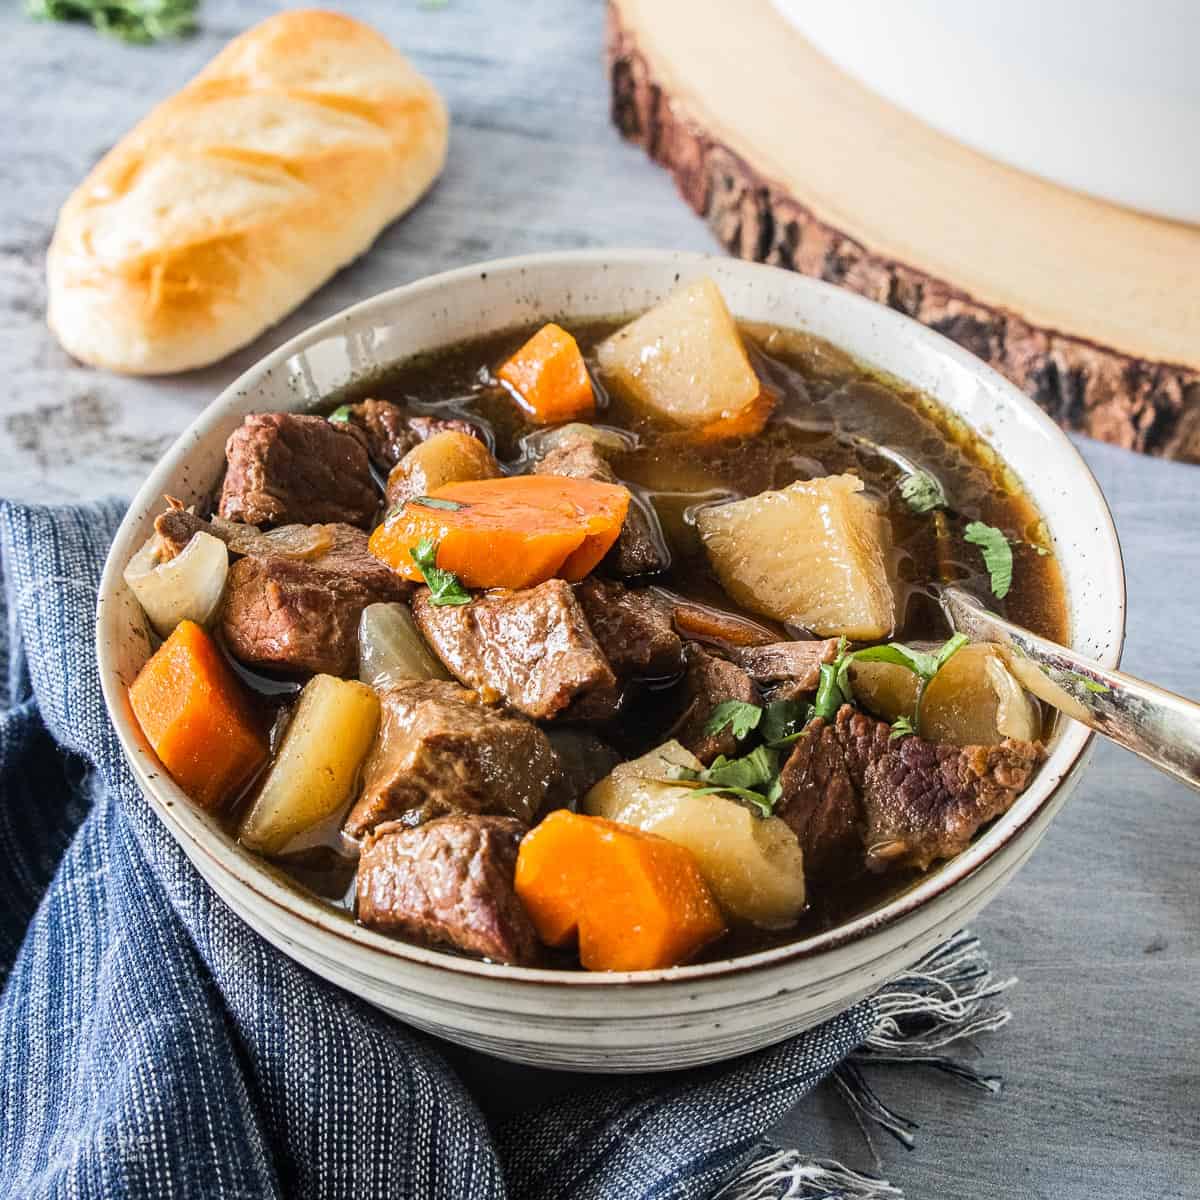 irish stew recipe crock pot - www.optuseducation.com.